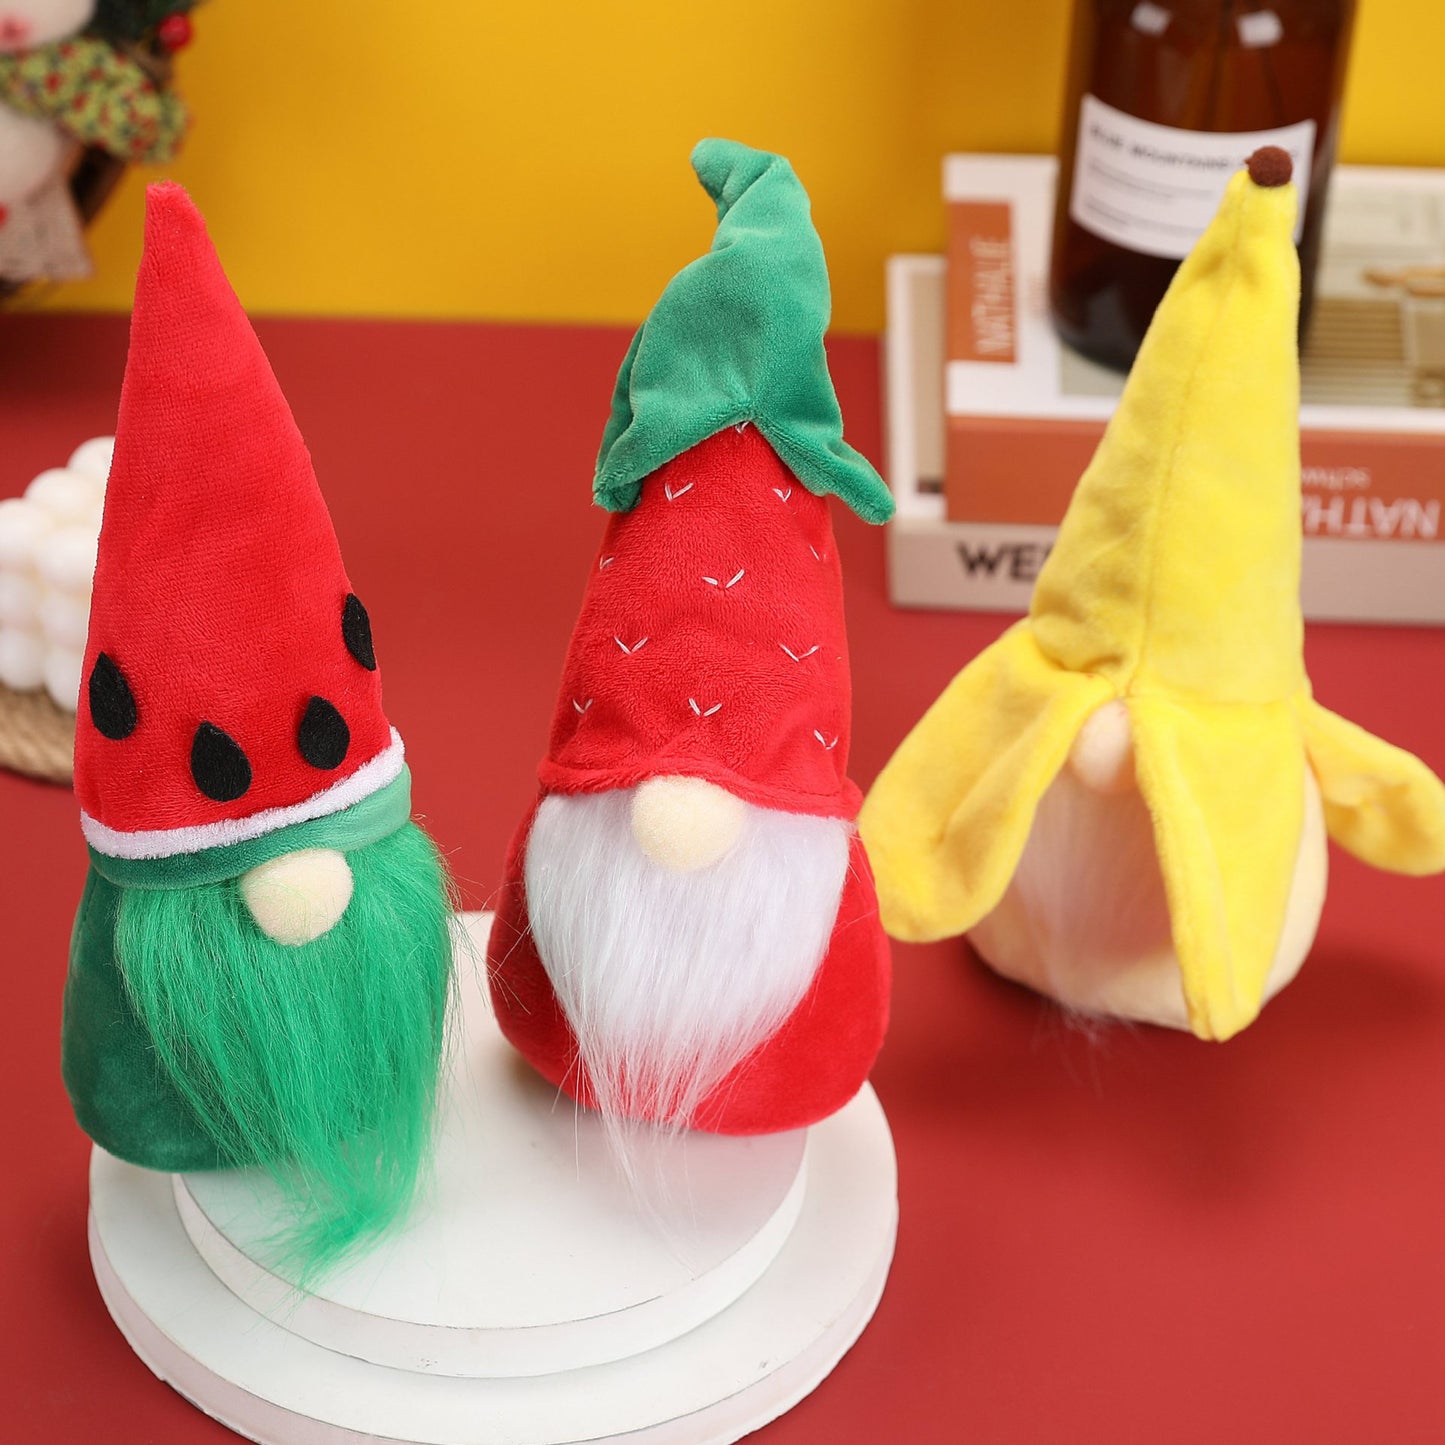 Summer Fruit Gnome